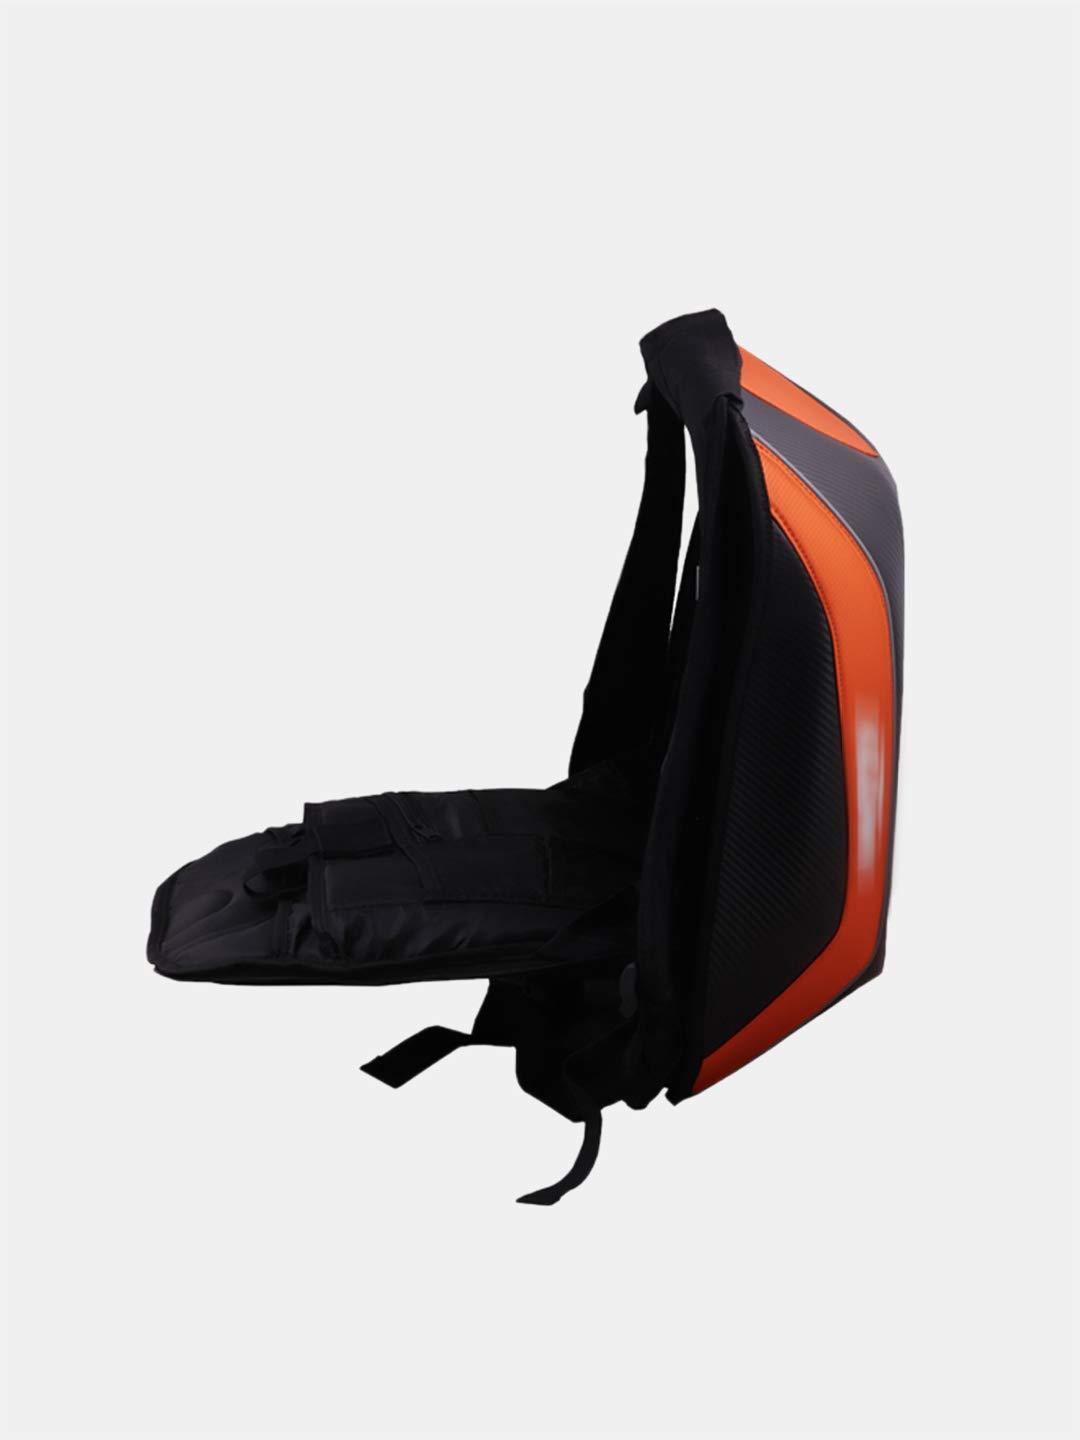 BACKPACKS - Aerodynamic KTM Drag Backpack for Motor Cycle Riders (Orange and Black)Backpack for Motor Cycle Riders (Orange and Black) - LRL Motors